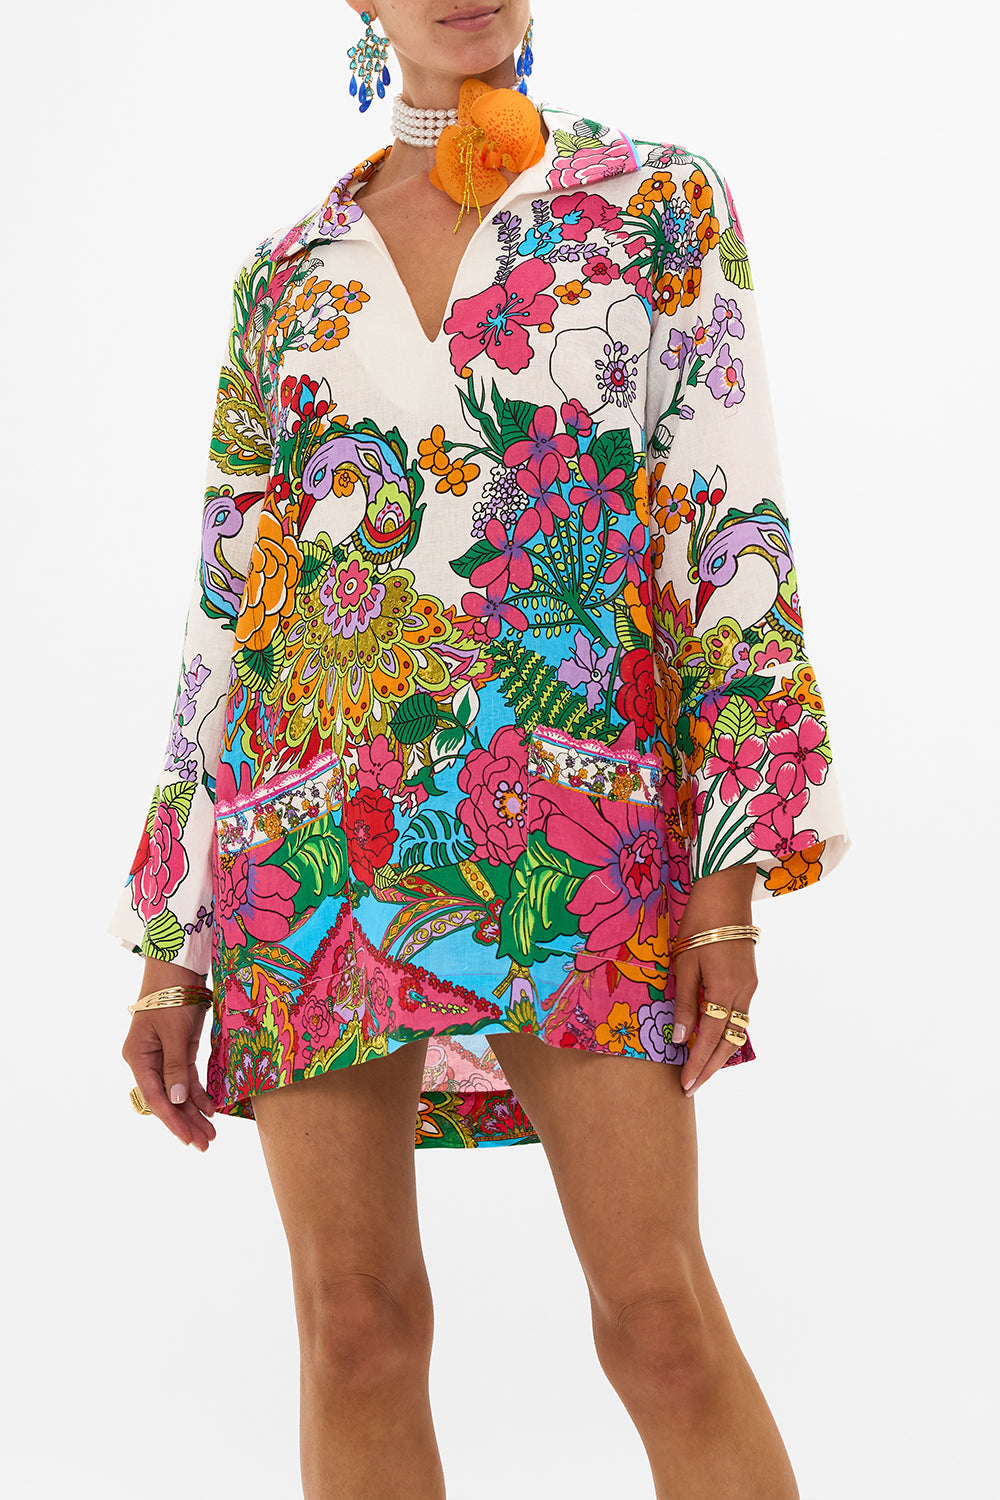 CAMILLA retro floral tunic dress in Cosmic Prairie print. 